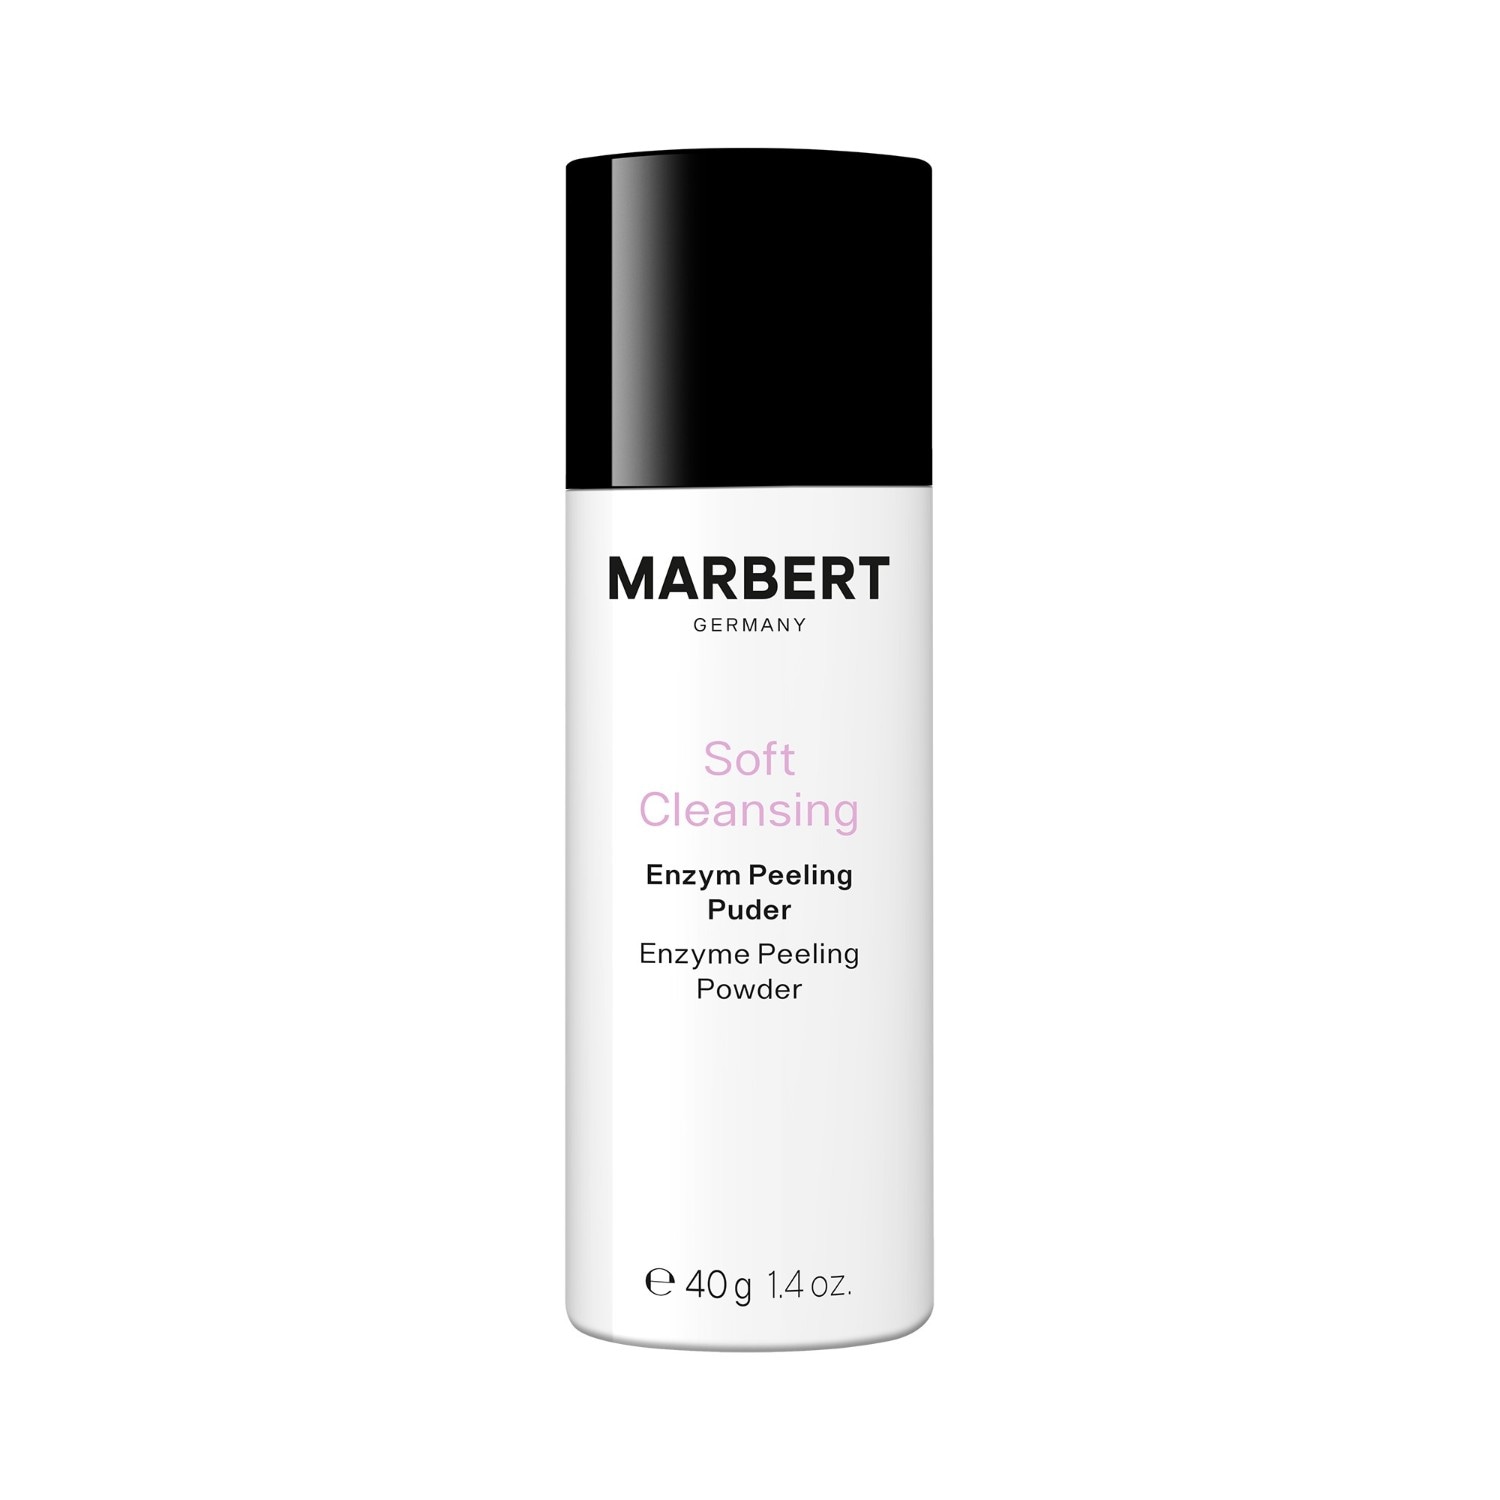 Marbert Soft Cleansing Enzym Peeling Powder